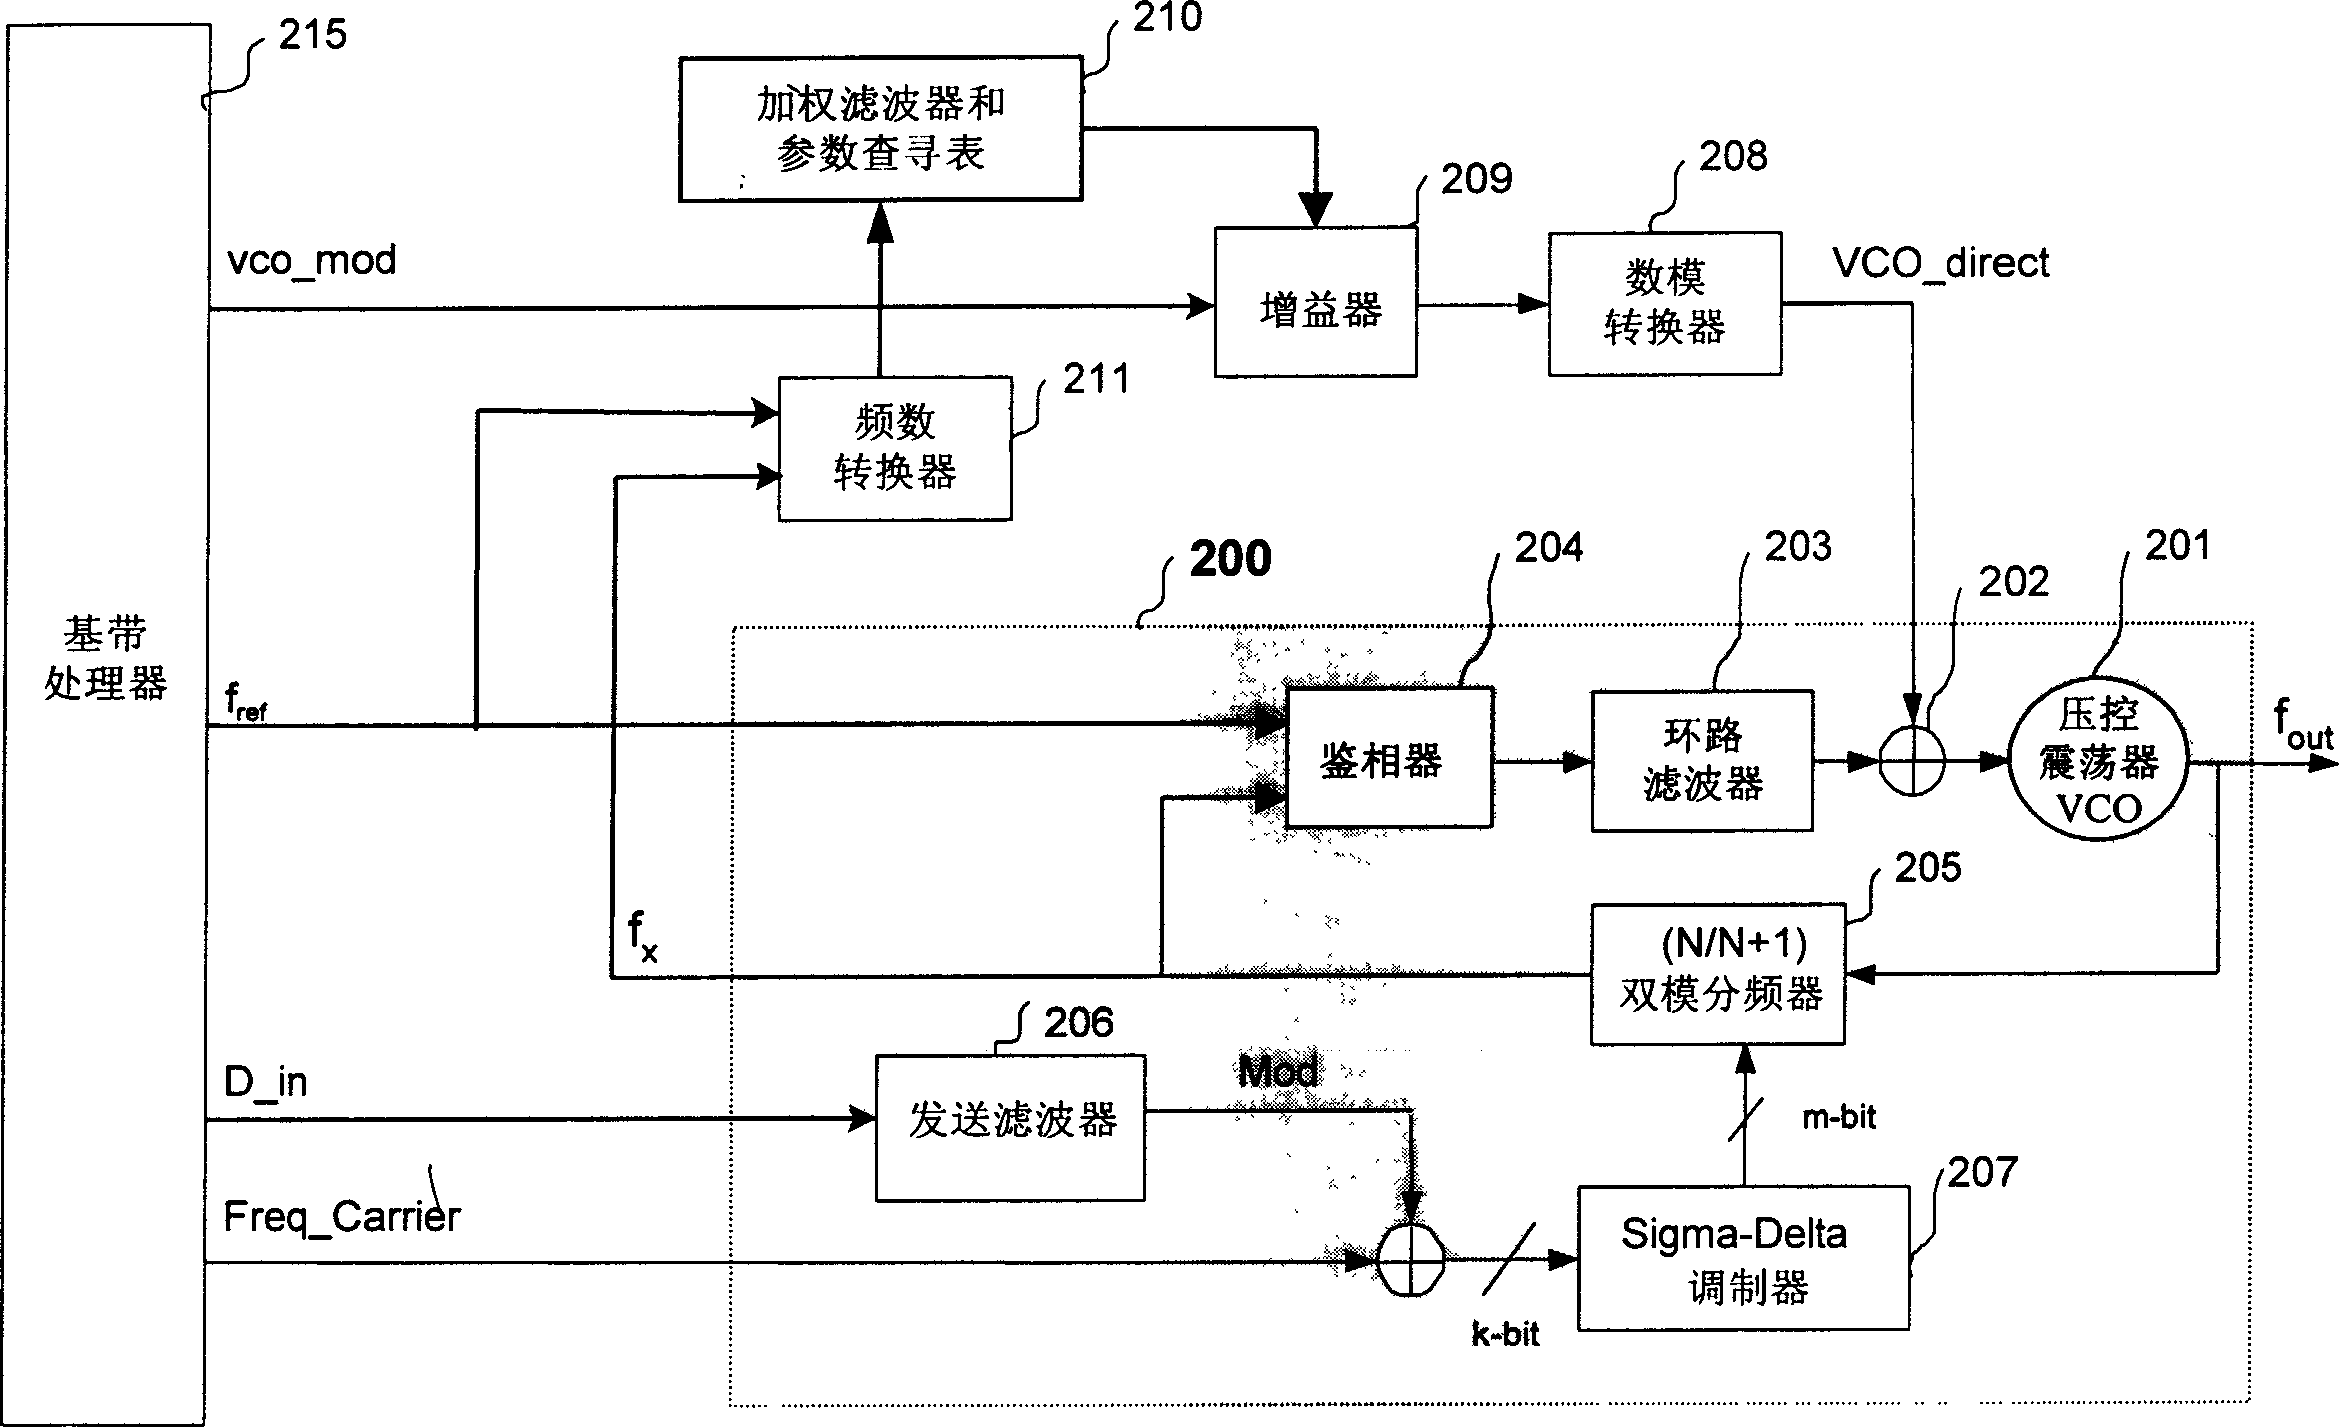 Frequency modulator for directly modulating VCO and modulating method